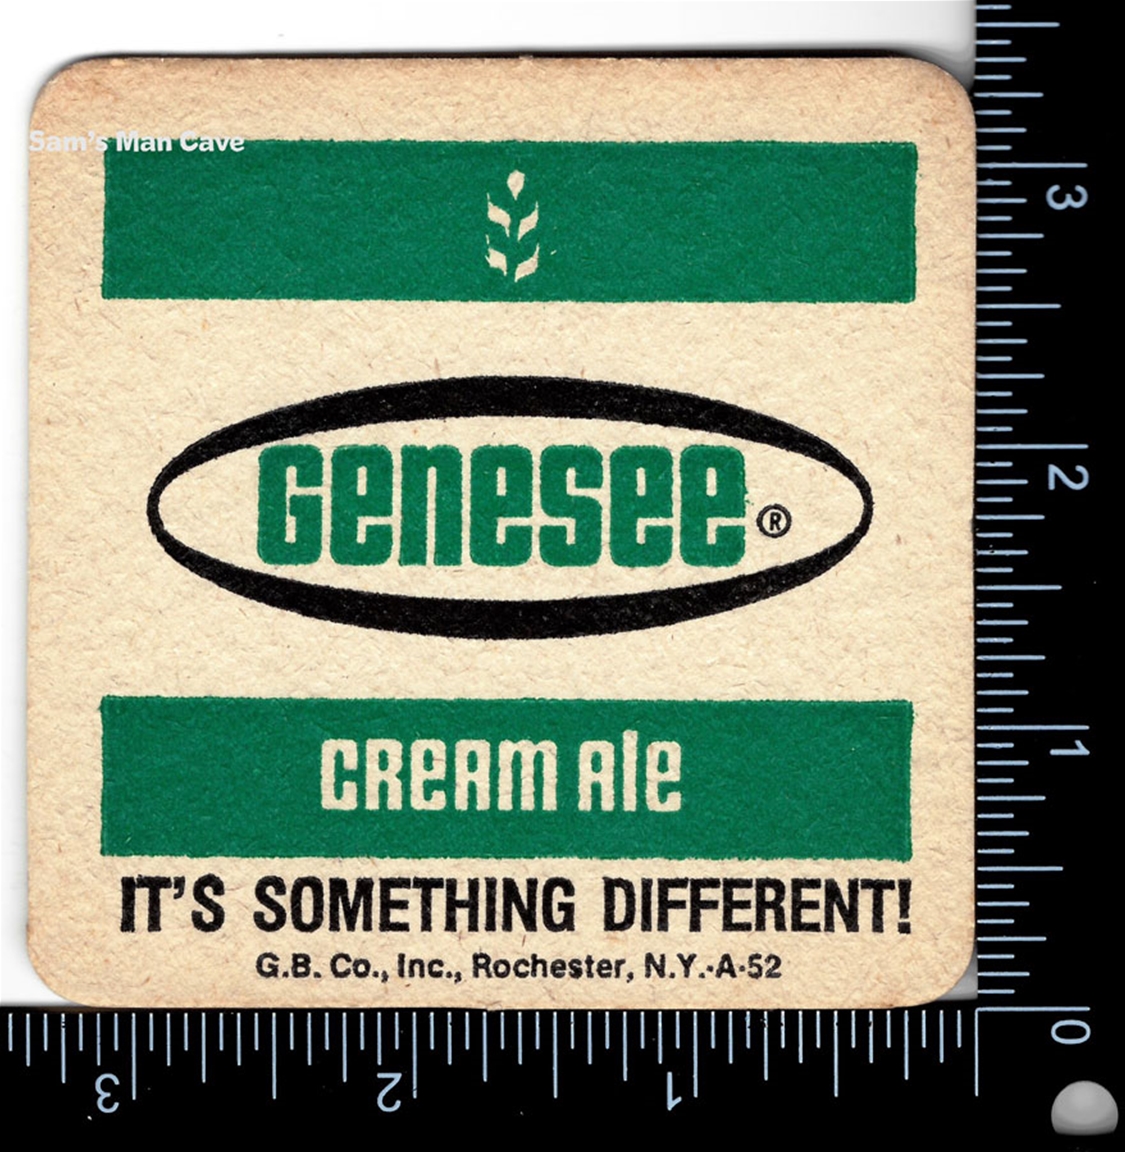 Genesee Cream Ale It's Different Coaster